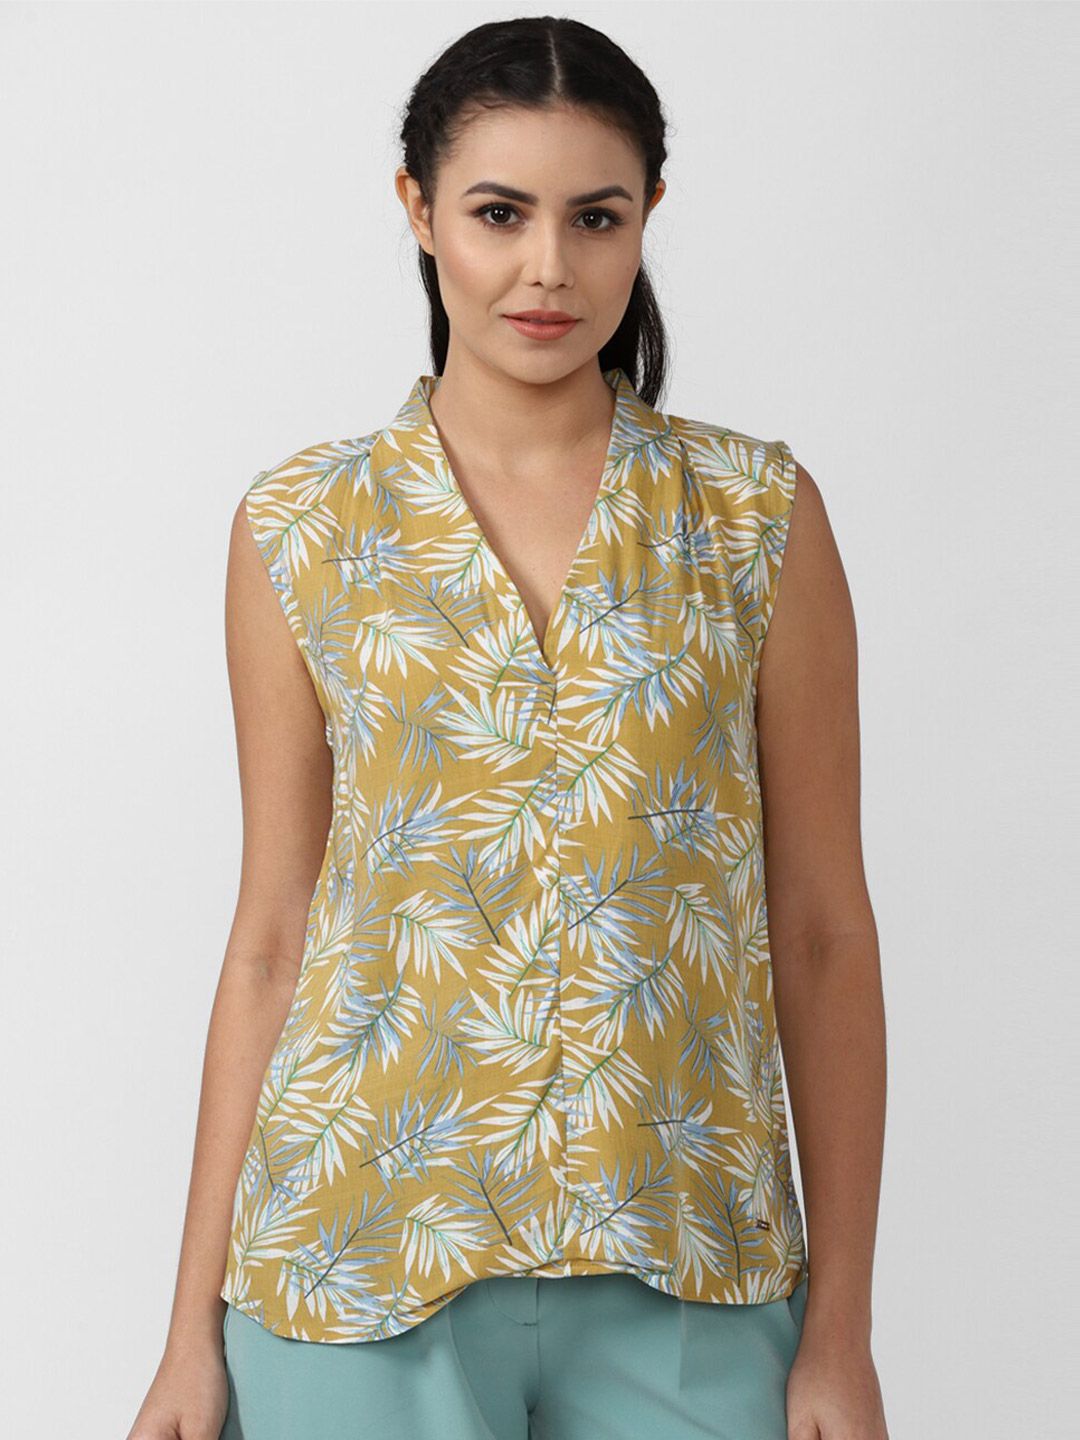 Van Heusen Woman Mustard Yellow & White Tropical Print Tropical Top Price in India